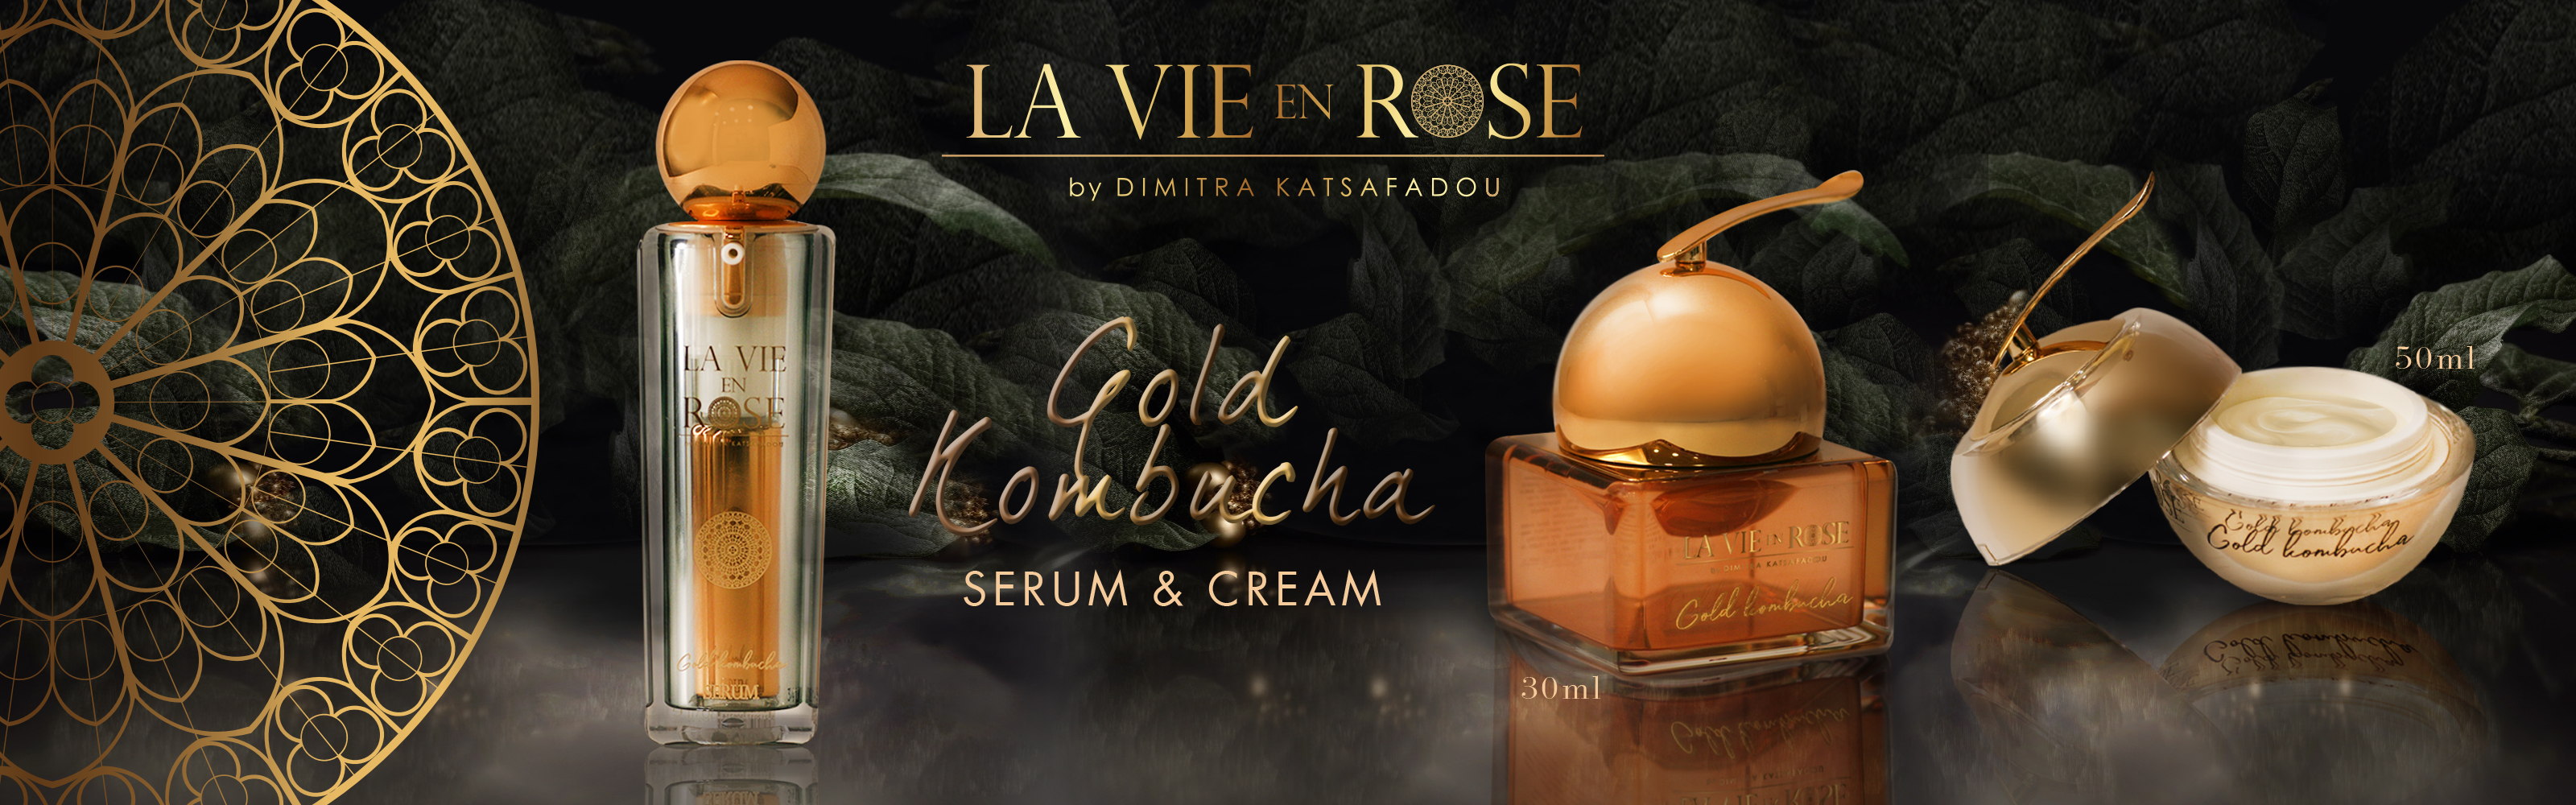 Gold Kombucha Collection La Vie en Rose